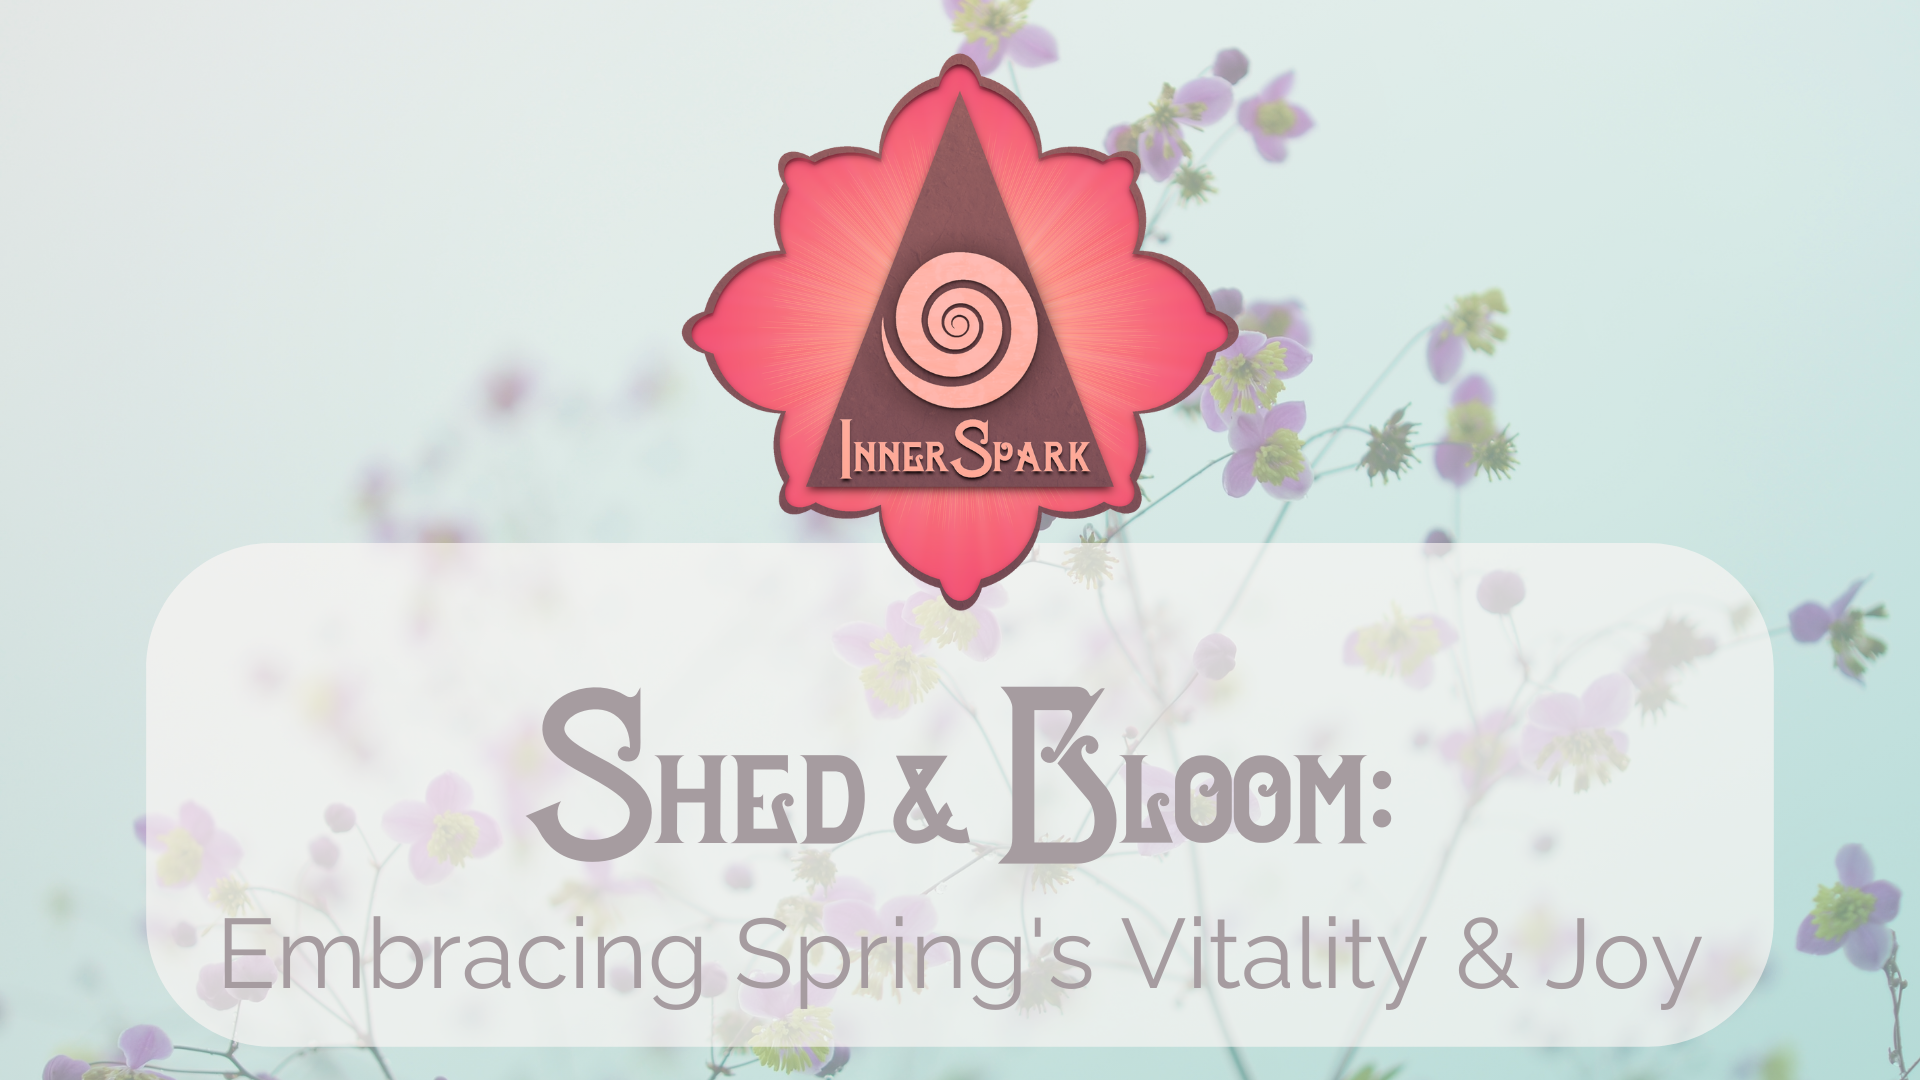 Shed & Bloom: Embracing Spring’s Vitality & Joy